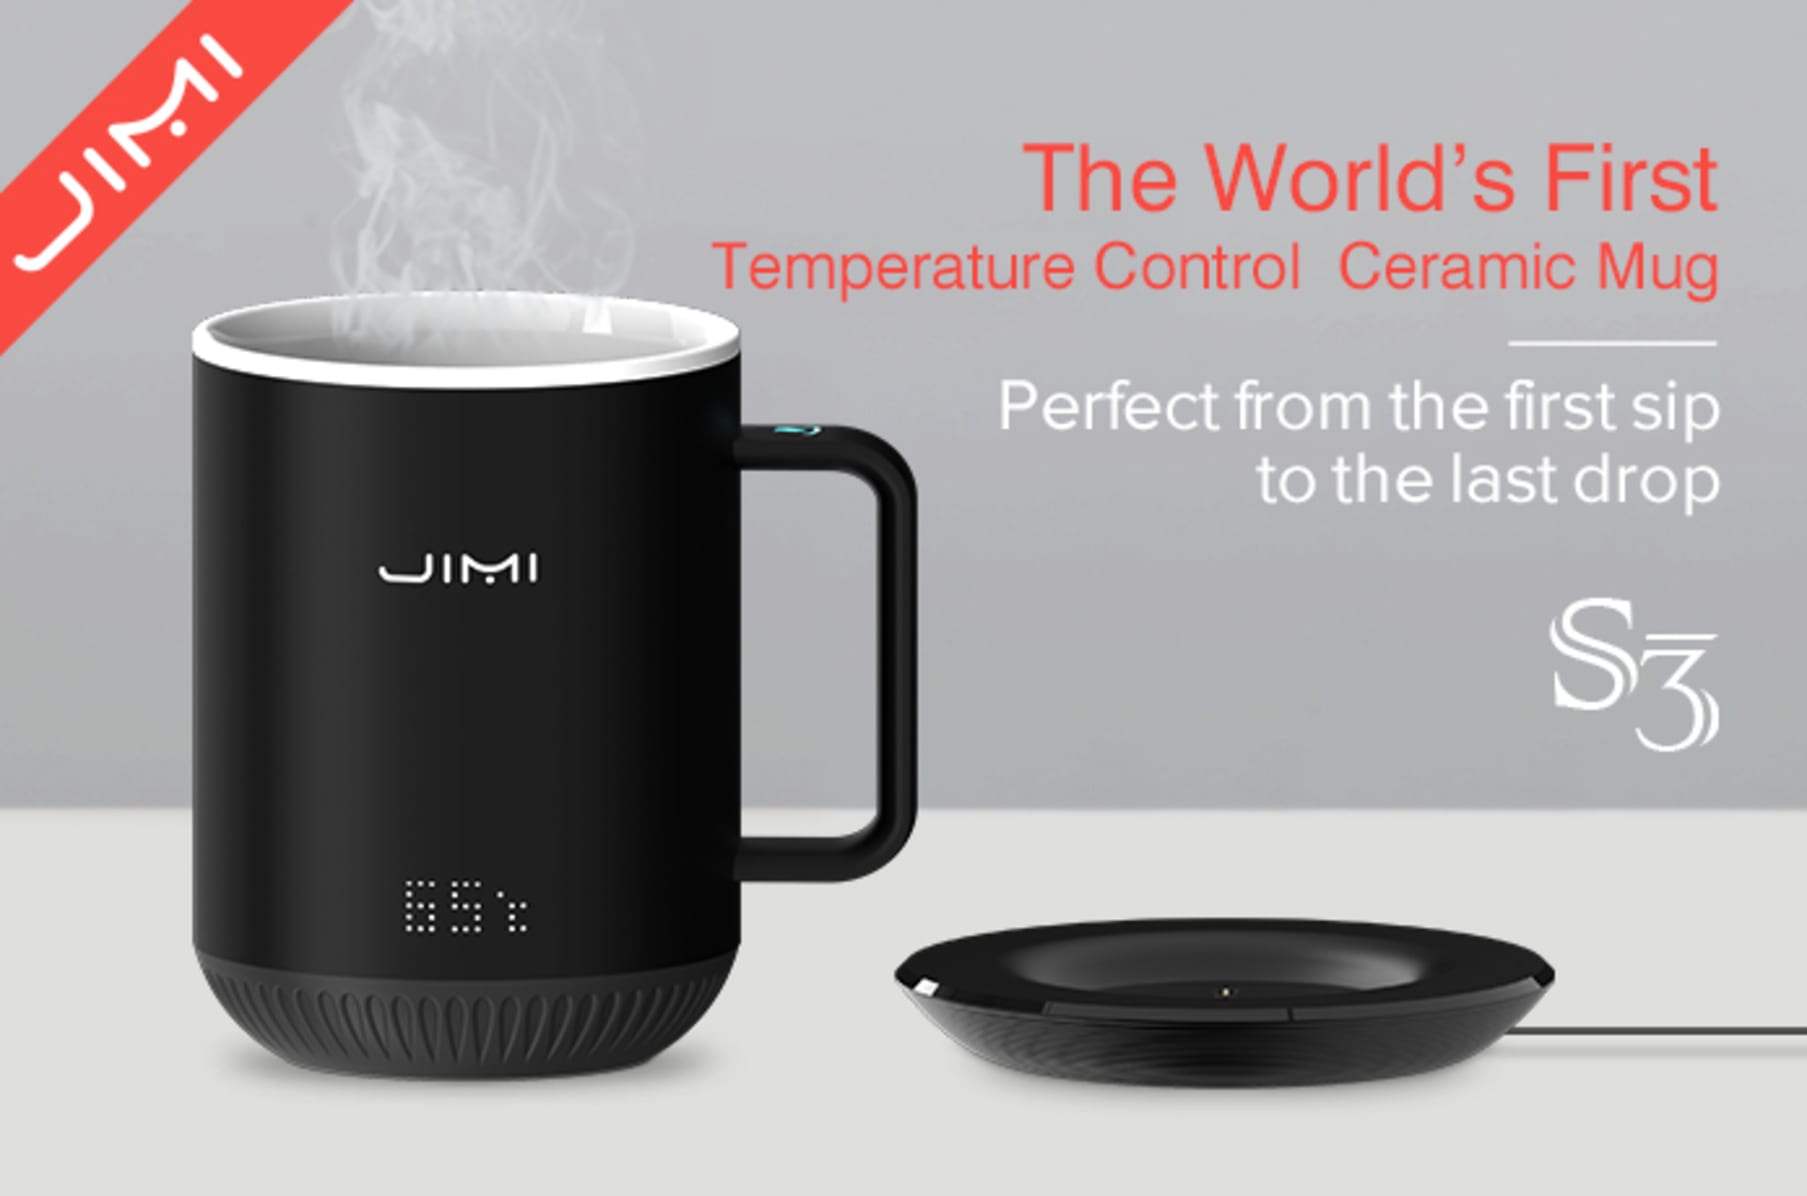 The World's First Temperature Control Ceramic Mug